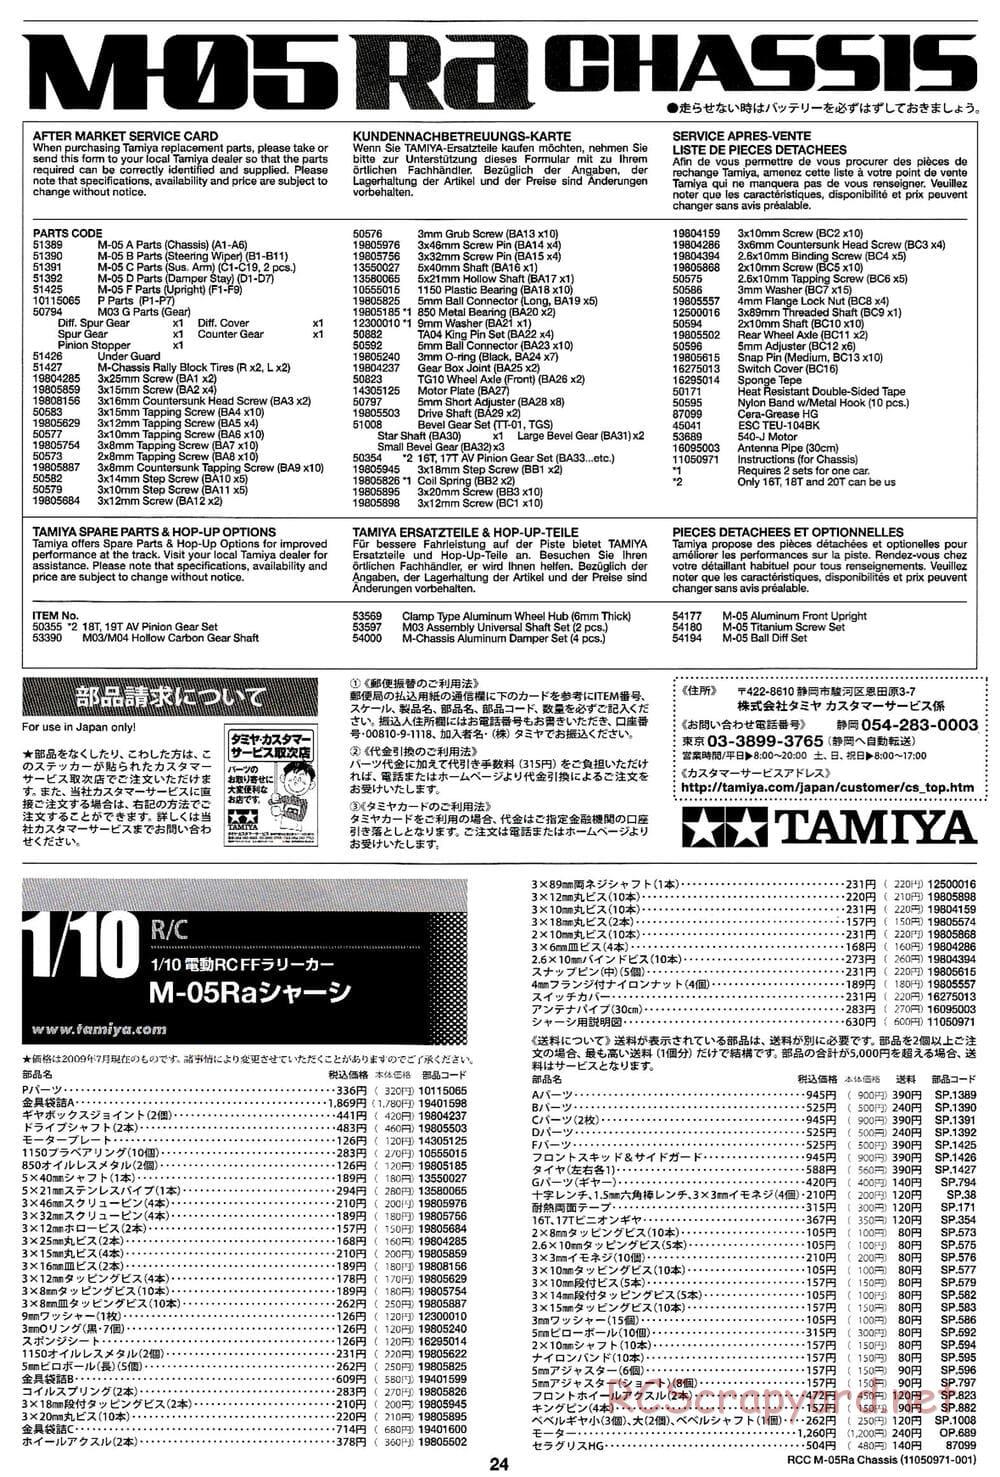 Tamiya - M-05Ra Chassis - Manual - Page 24